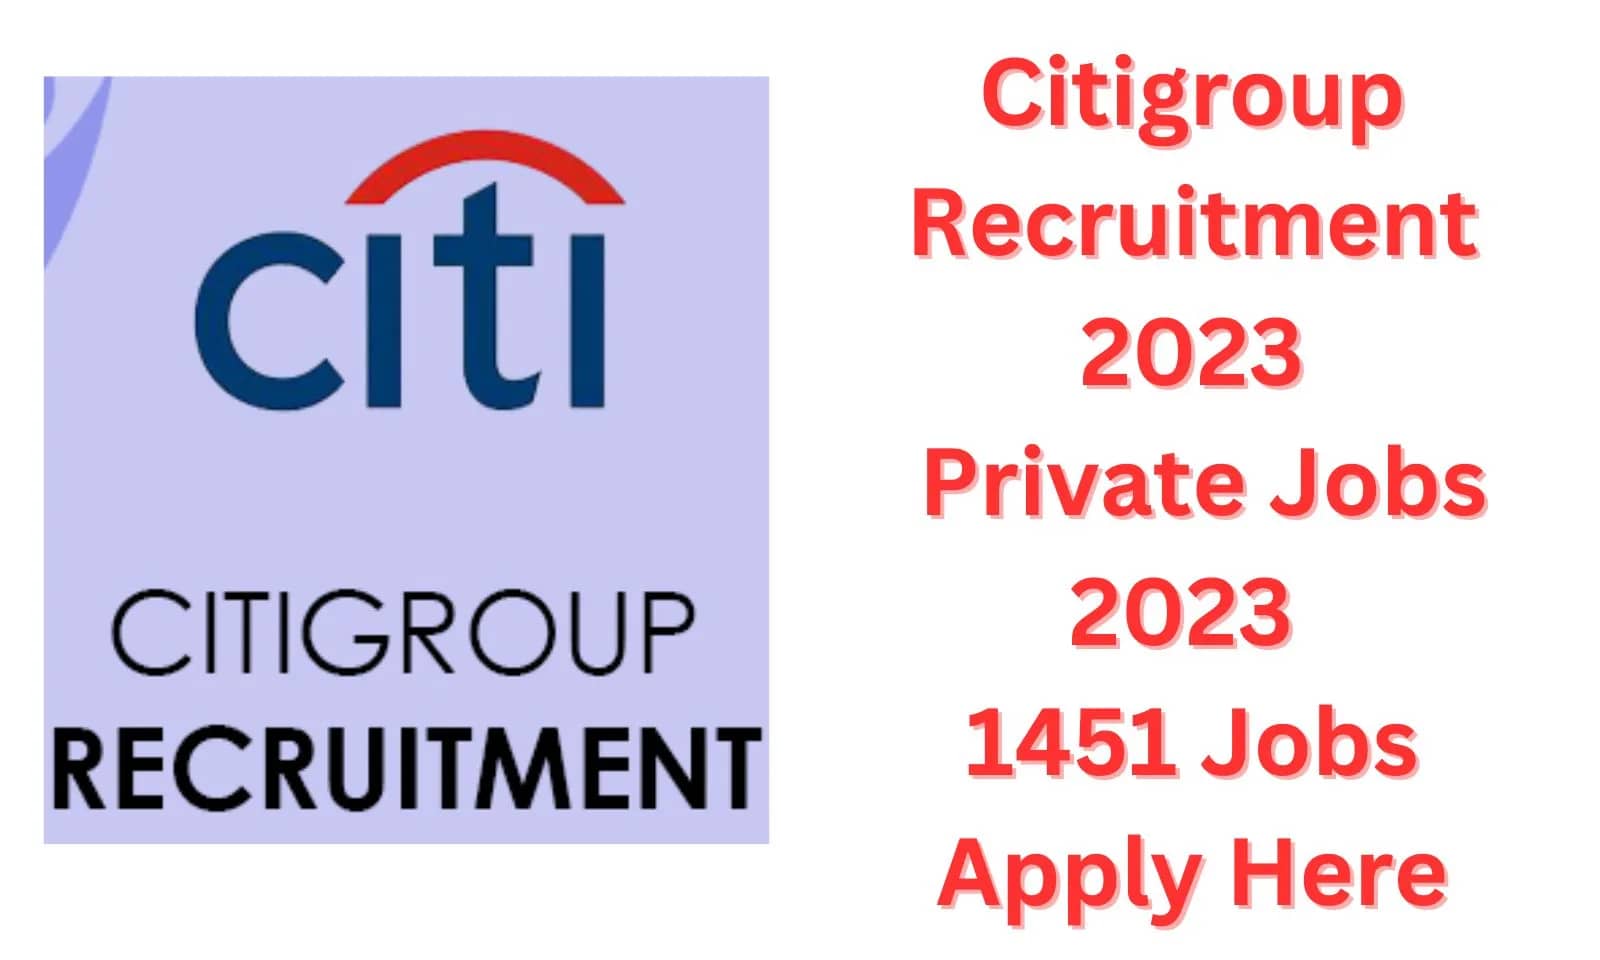 Citigroup Recruitment 2023